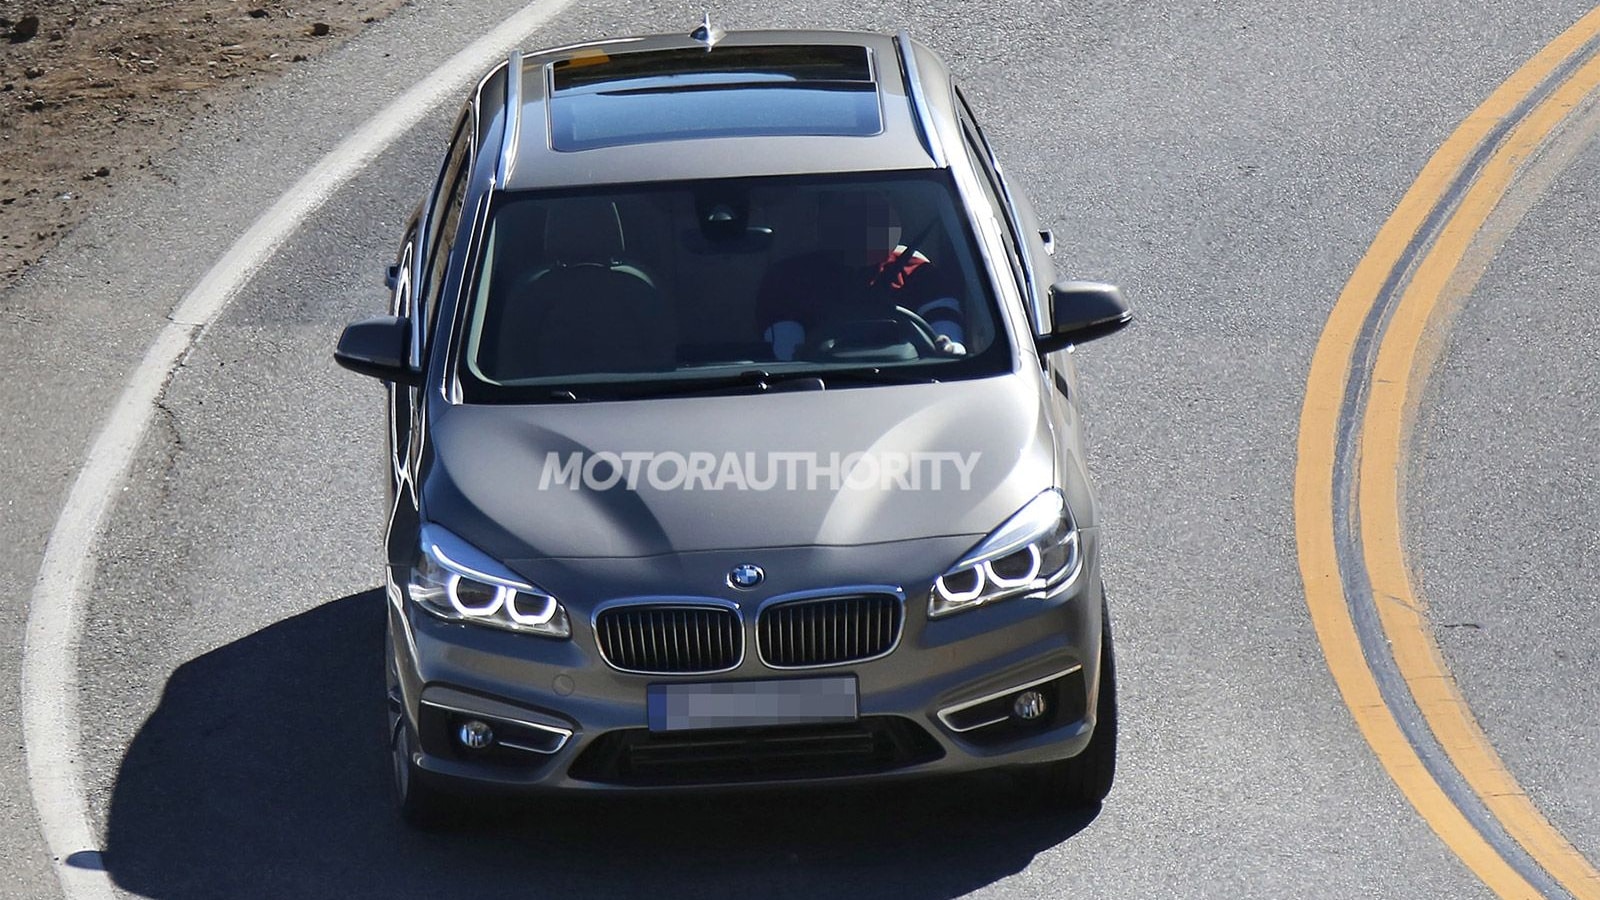 2014 BMW 2-Series Active Tourer spy shots